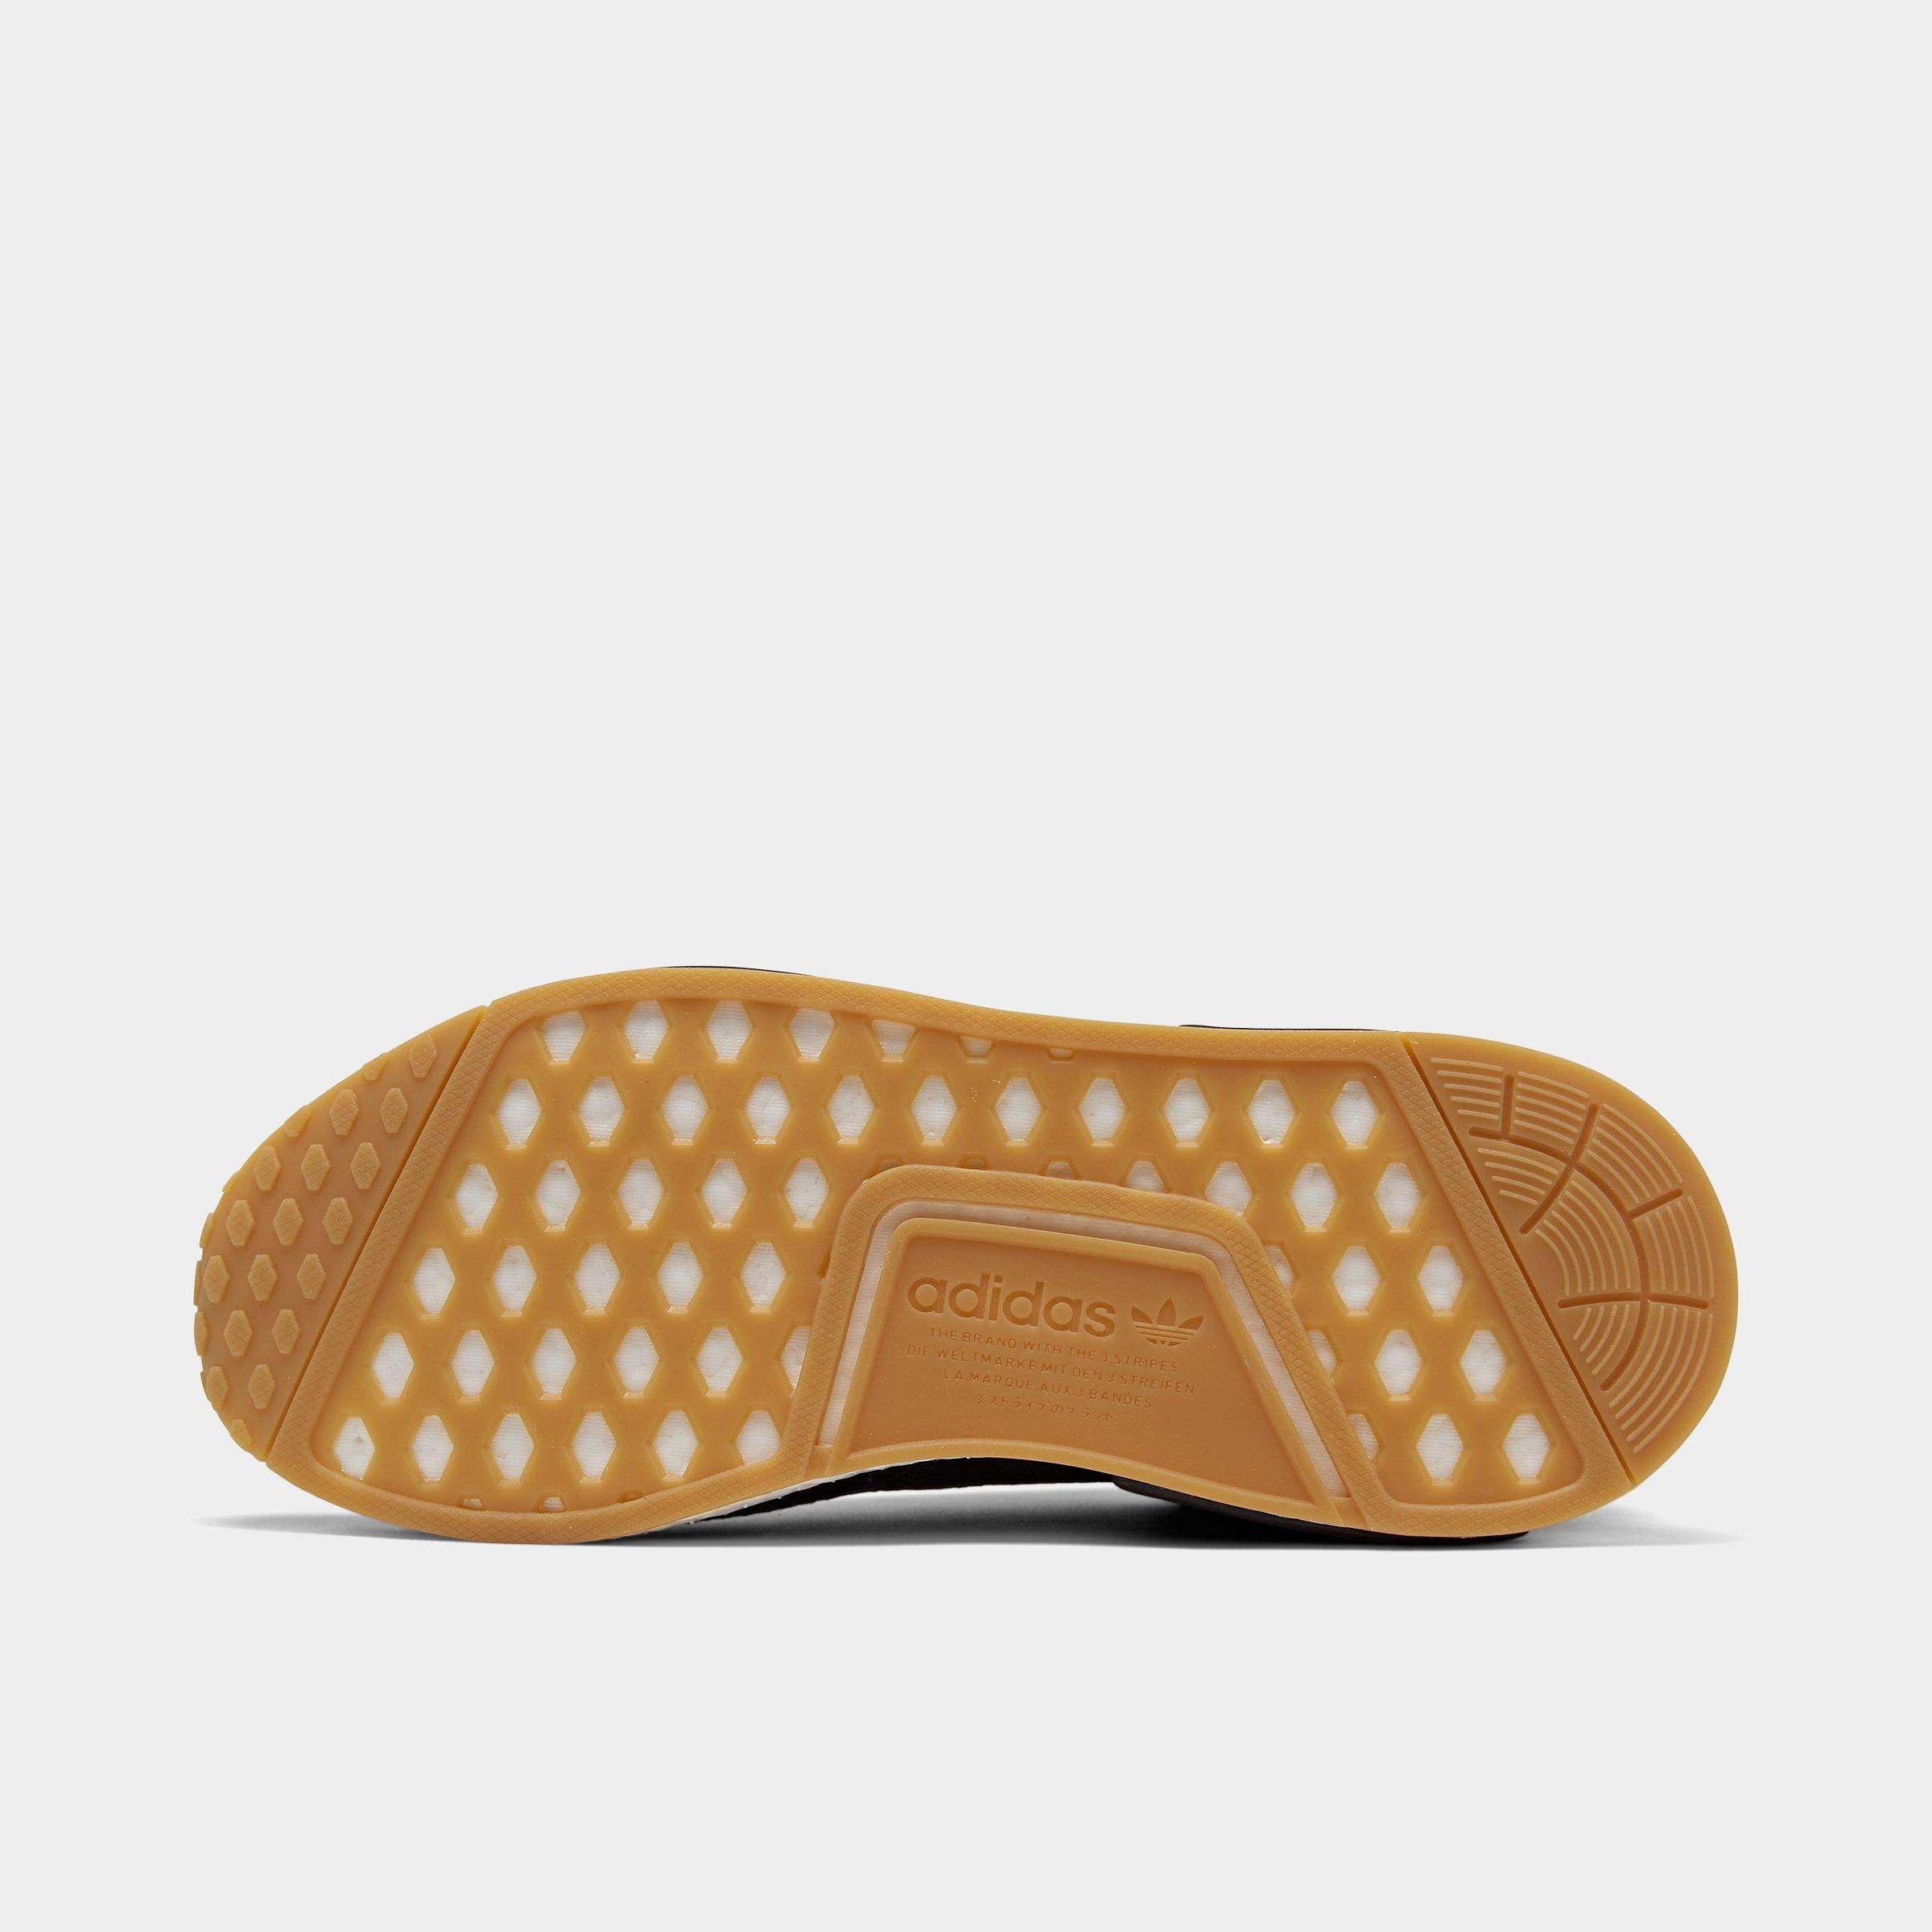 men's adidas nmd r1 stlt primeknit casual shoes